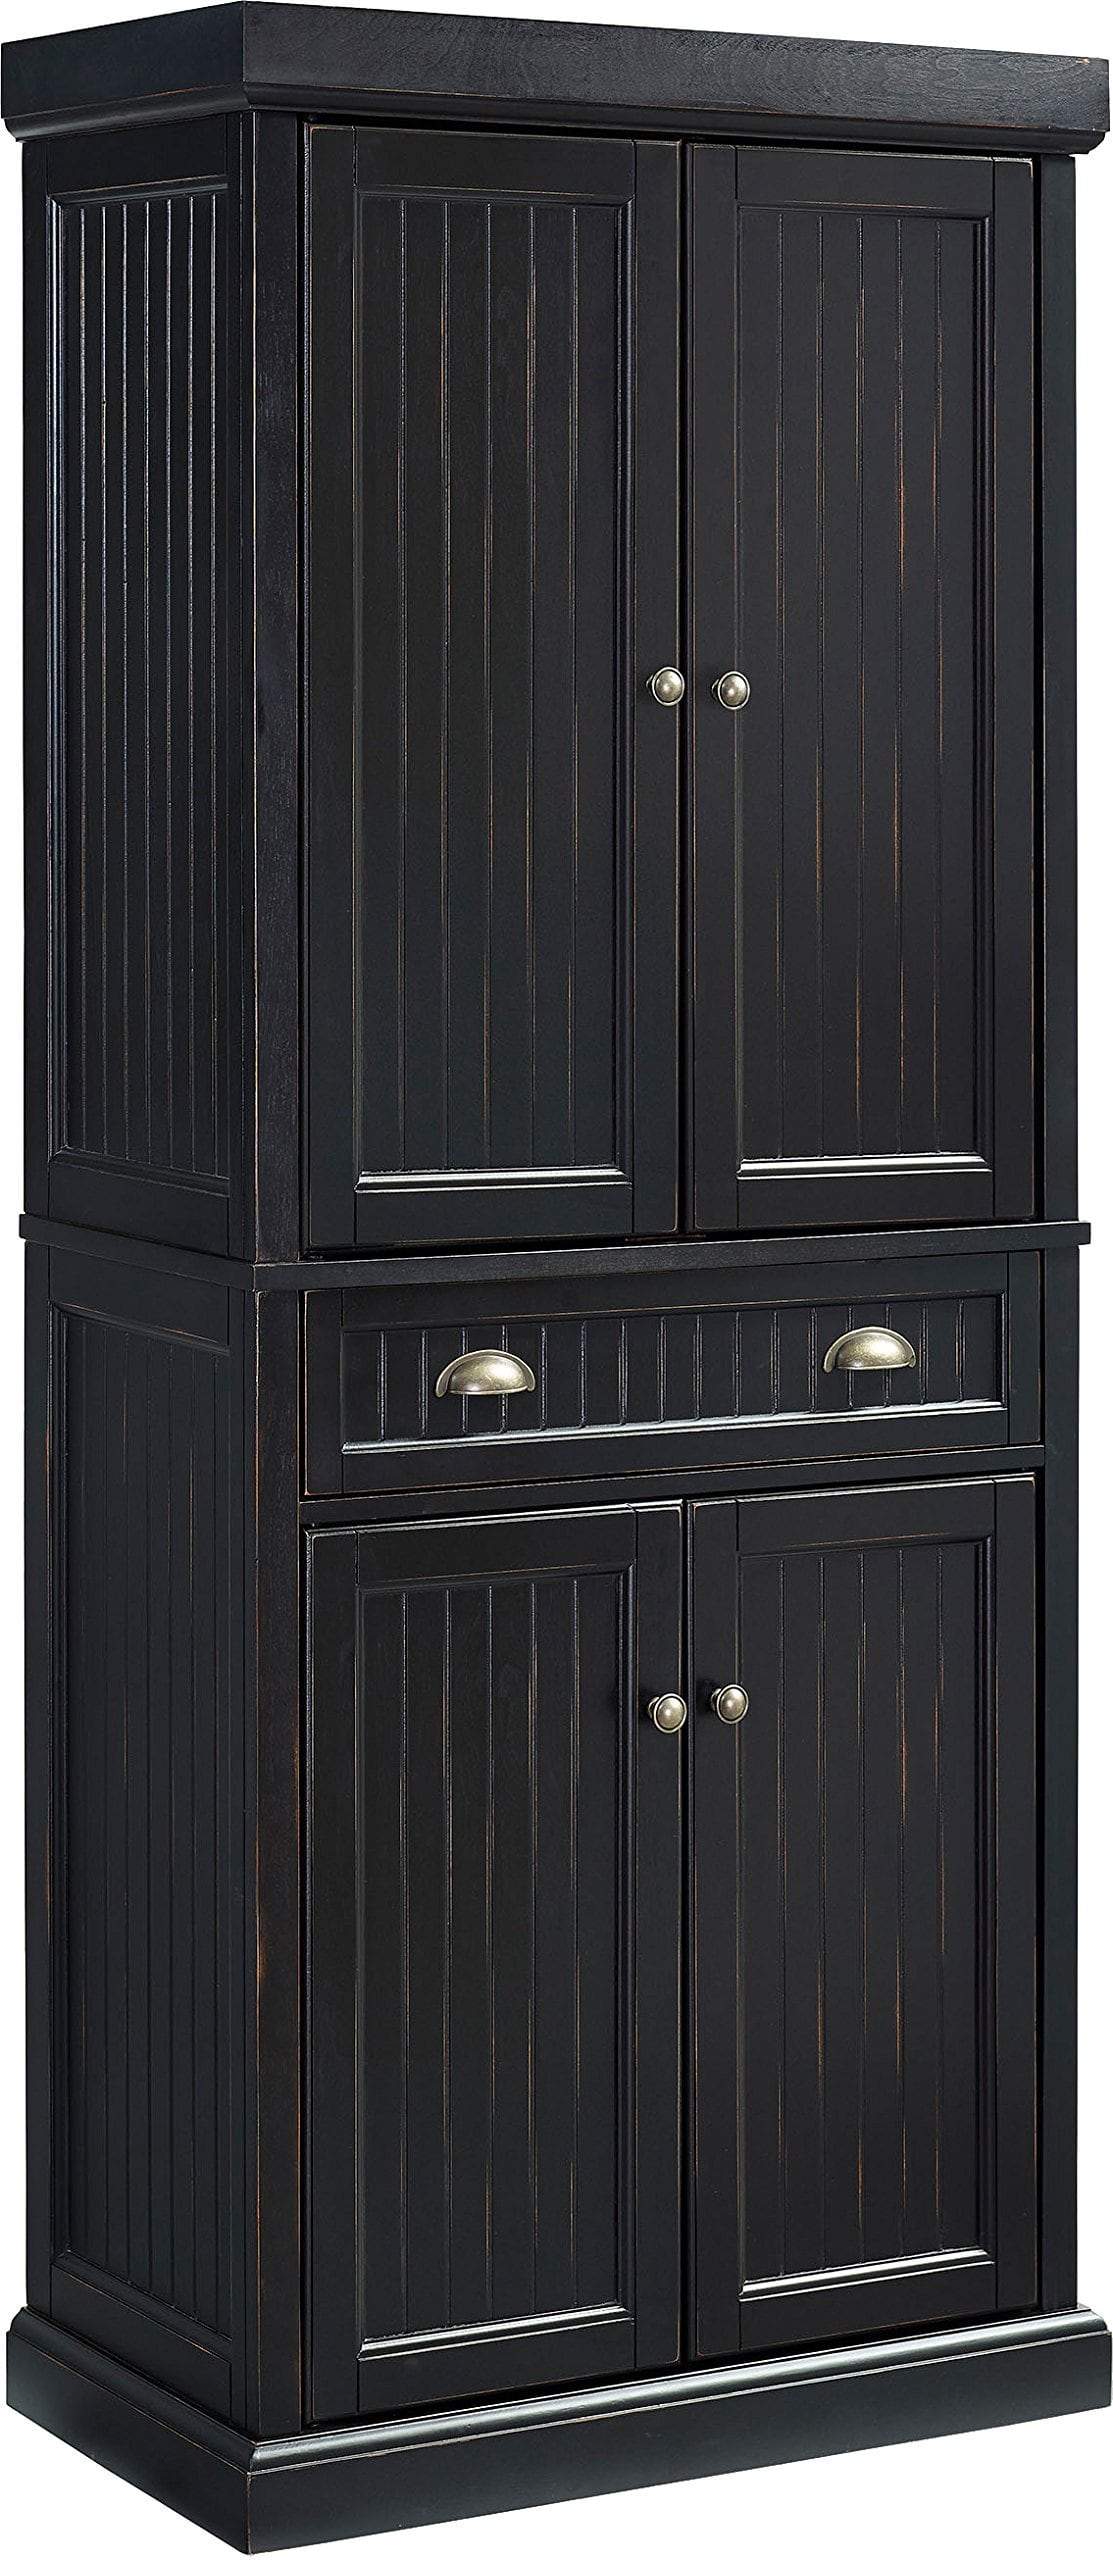 Selection crosley furniture seaside kitchen pantry cabinet distressed black